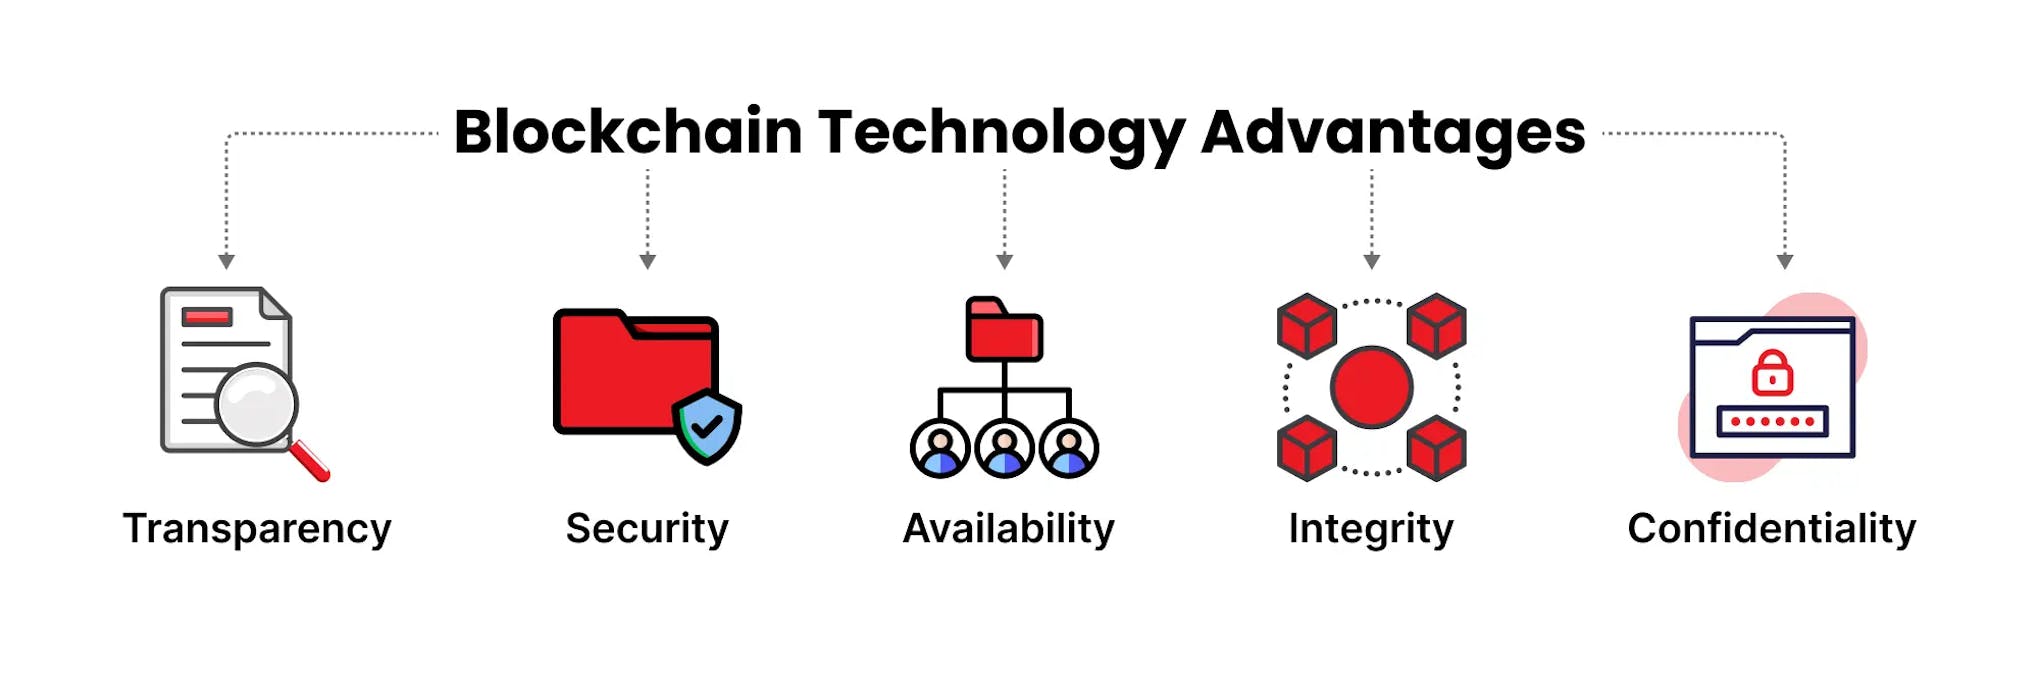 advantages of blockchain technology